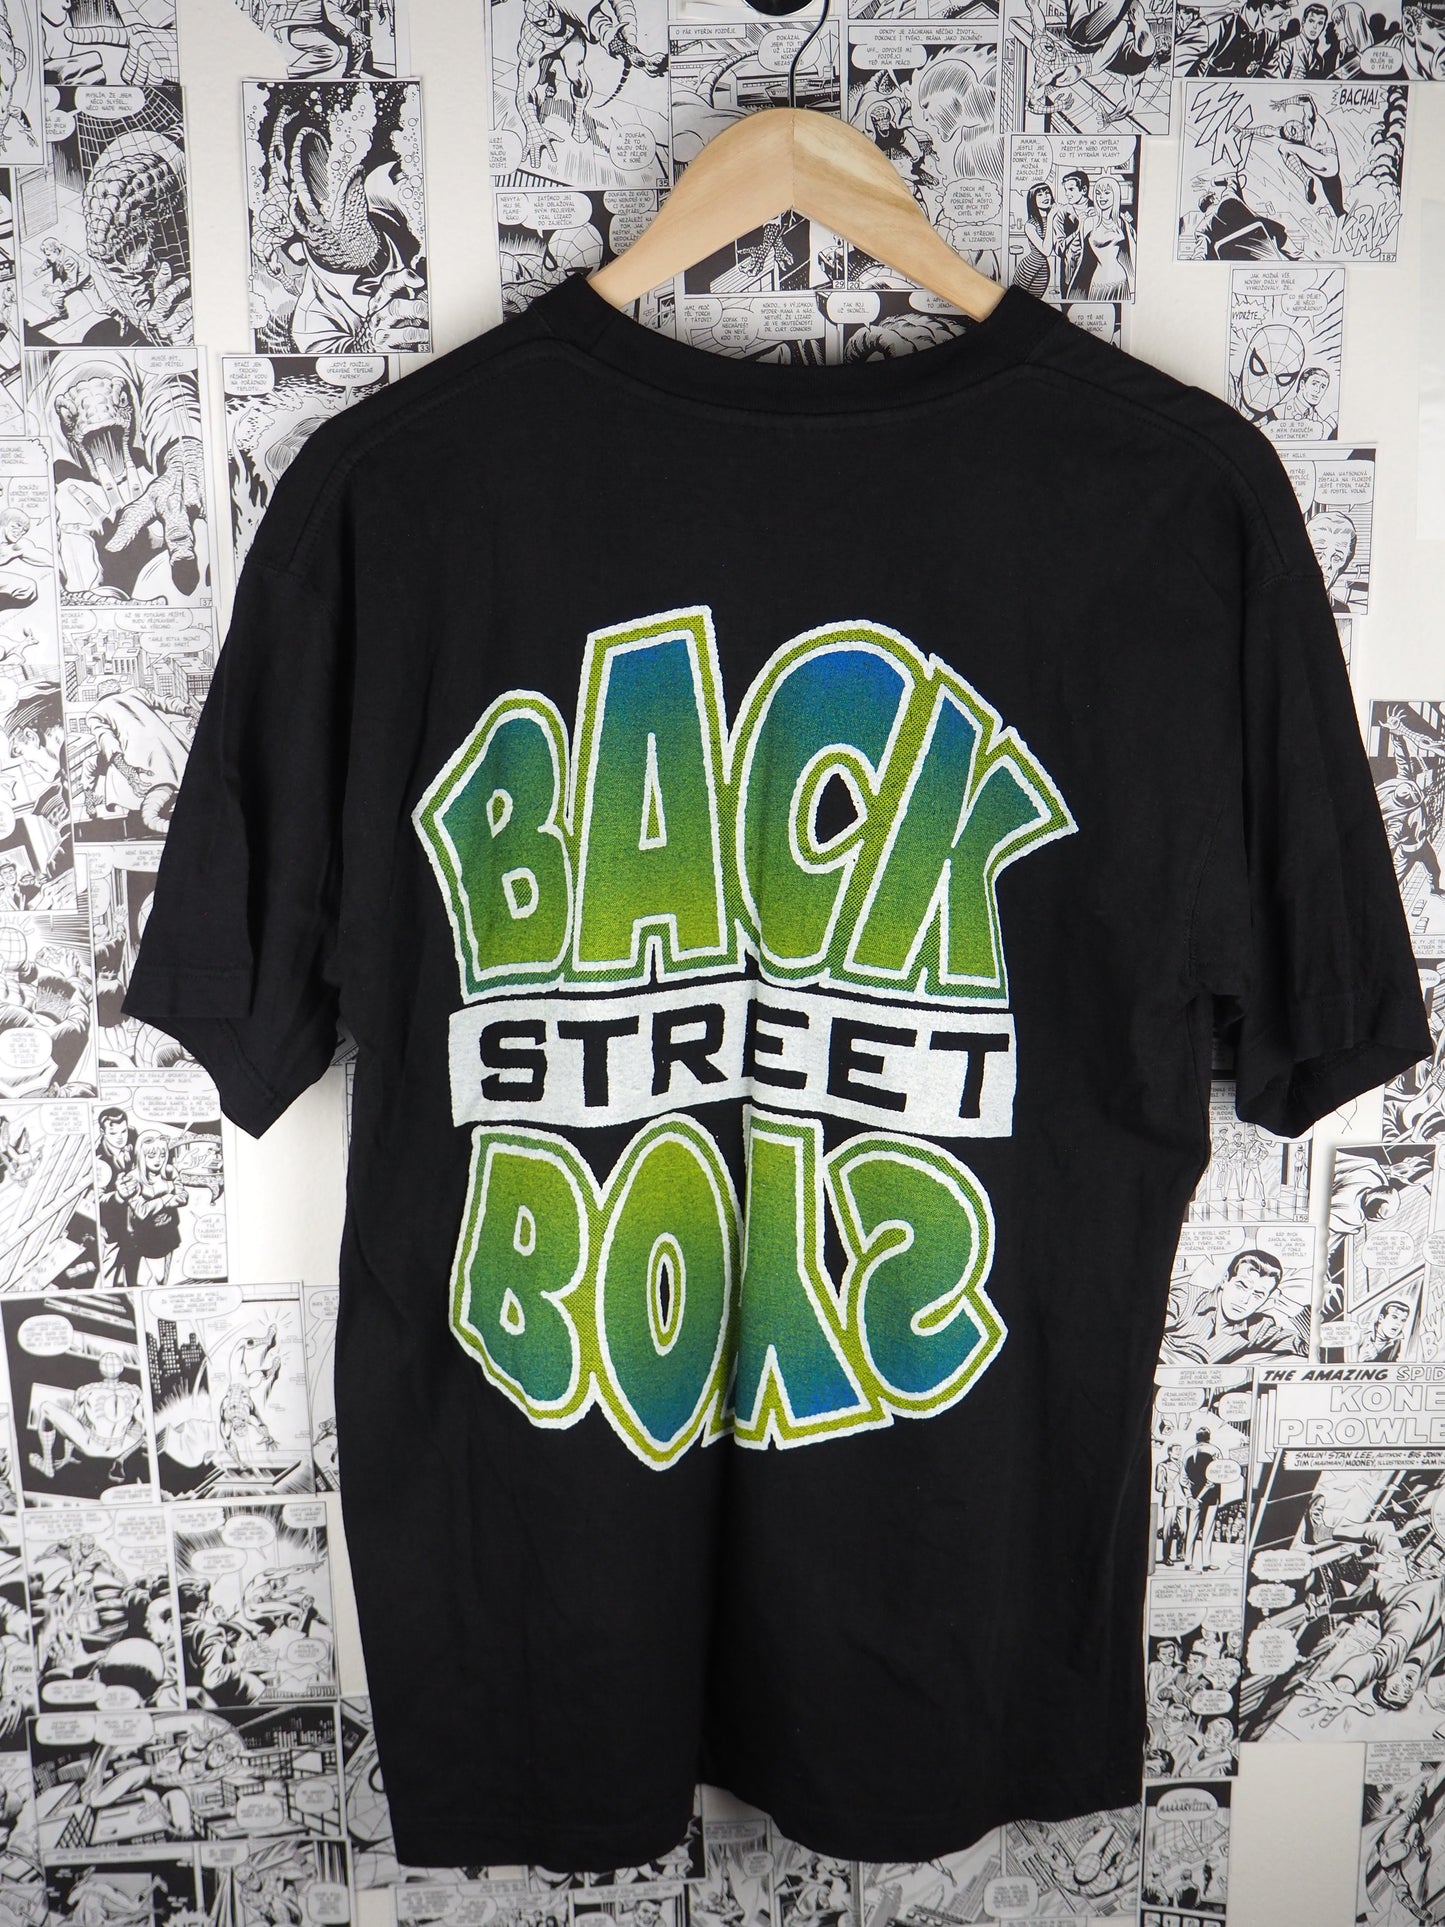 Vintage "Nick Carter" Back Street Boys 90s t-shirt - size L